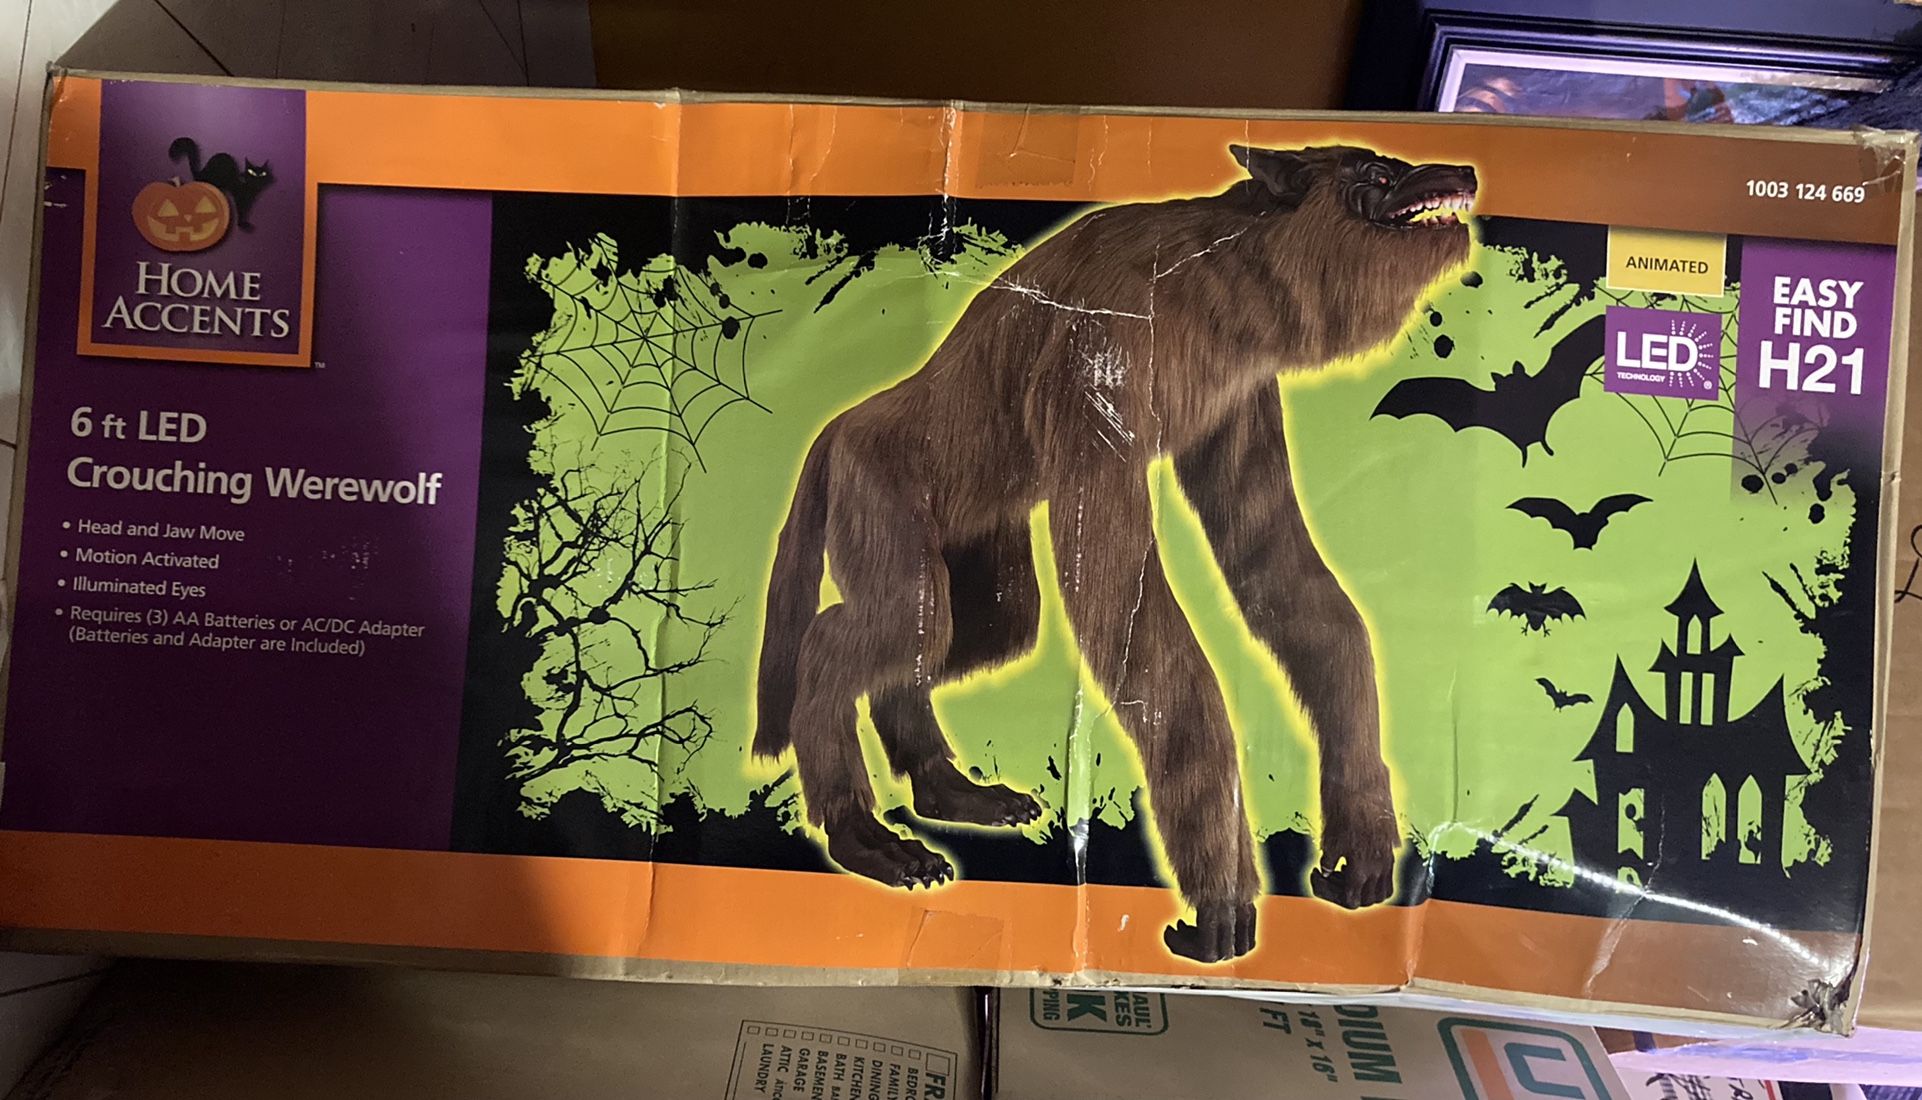 6 foot crouching werewolf, Animated Halloween prop